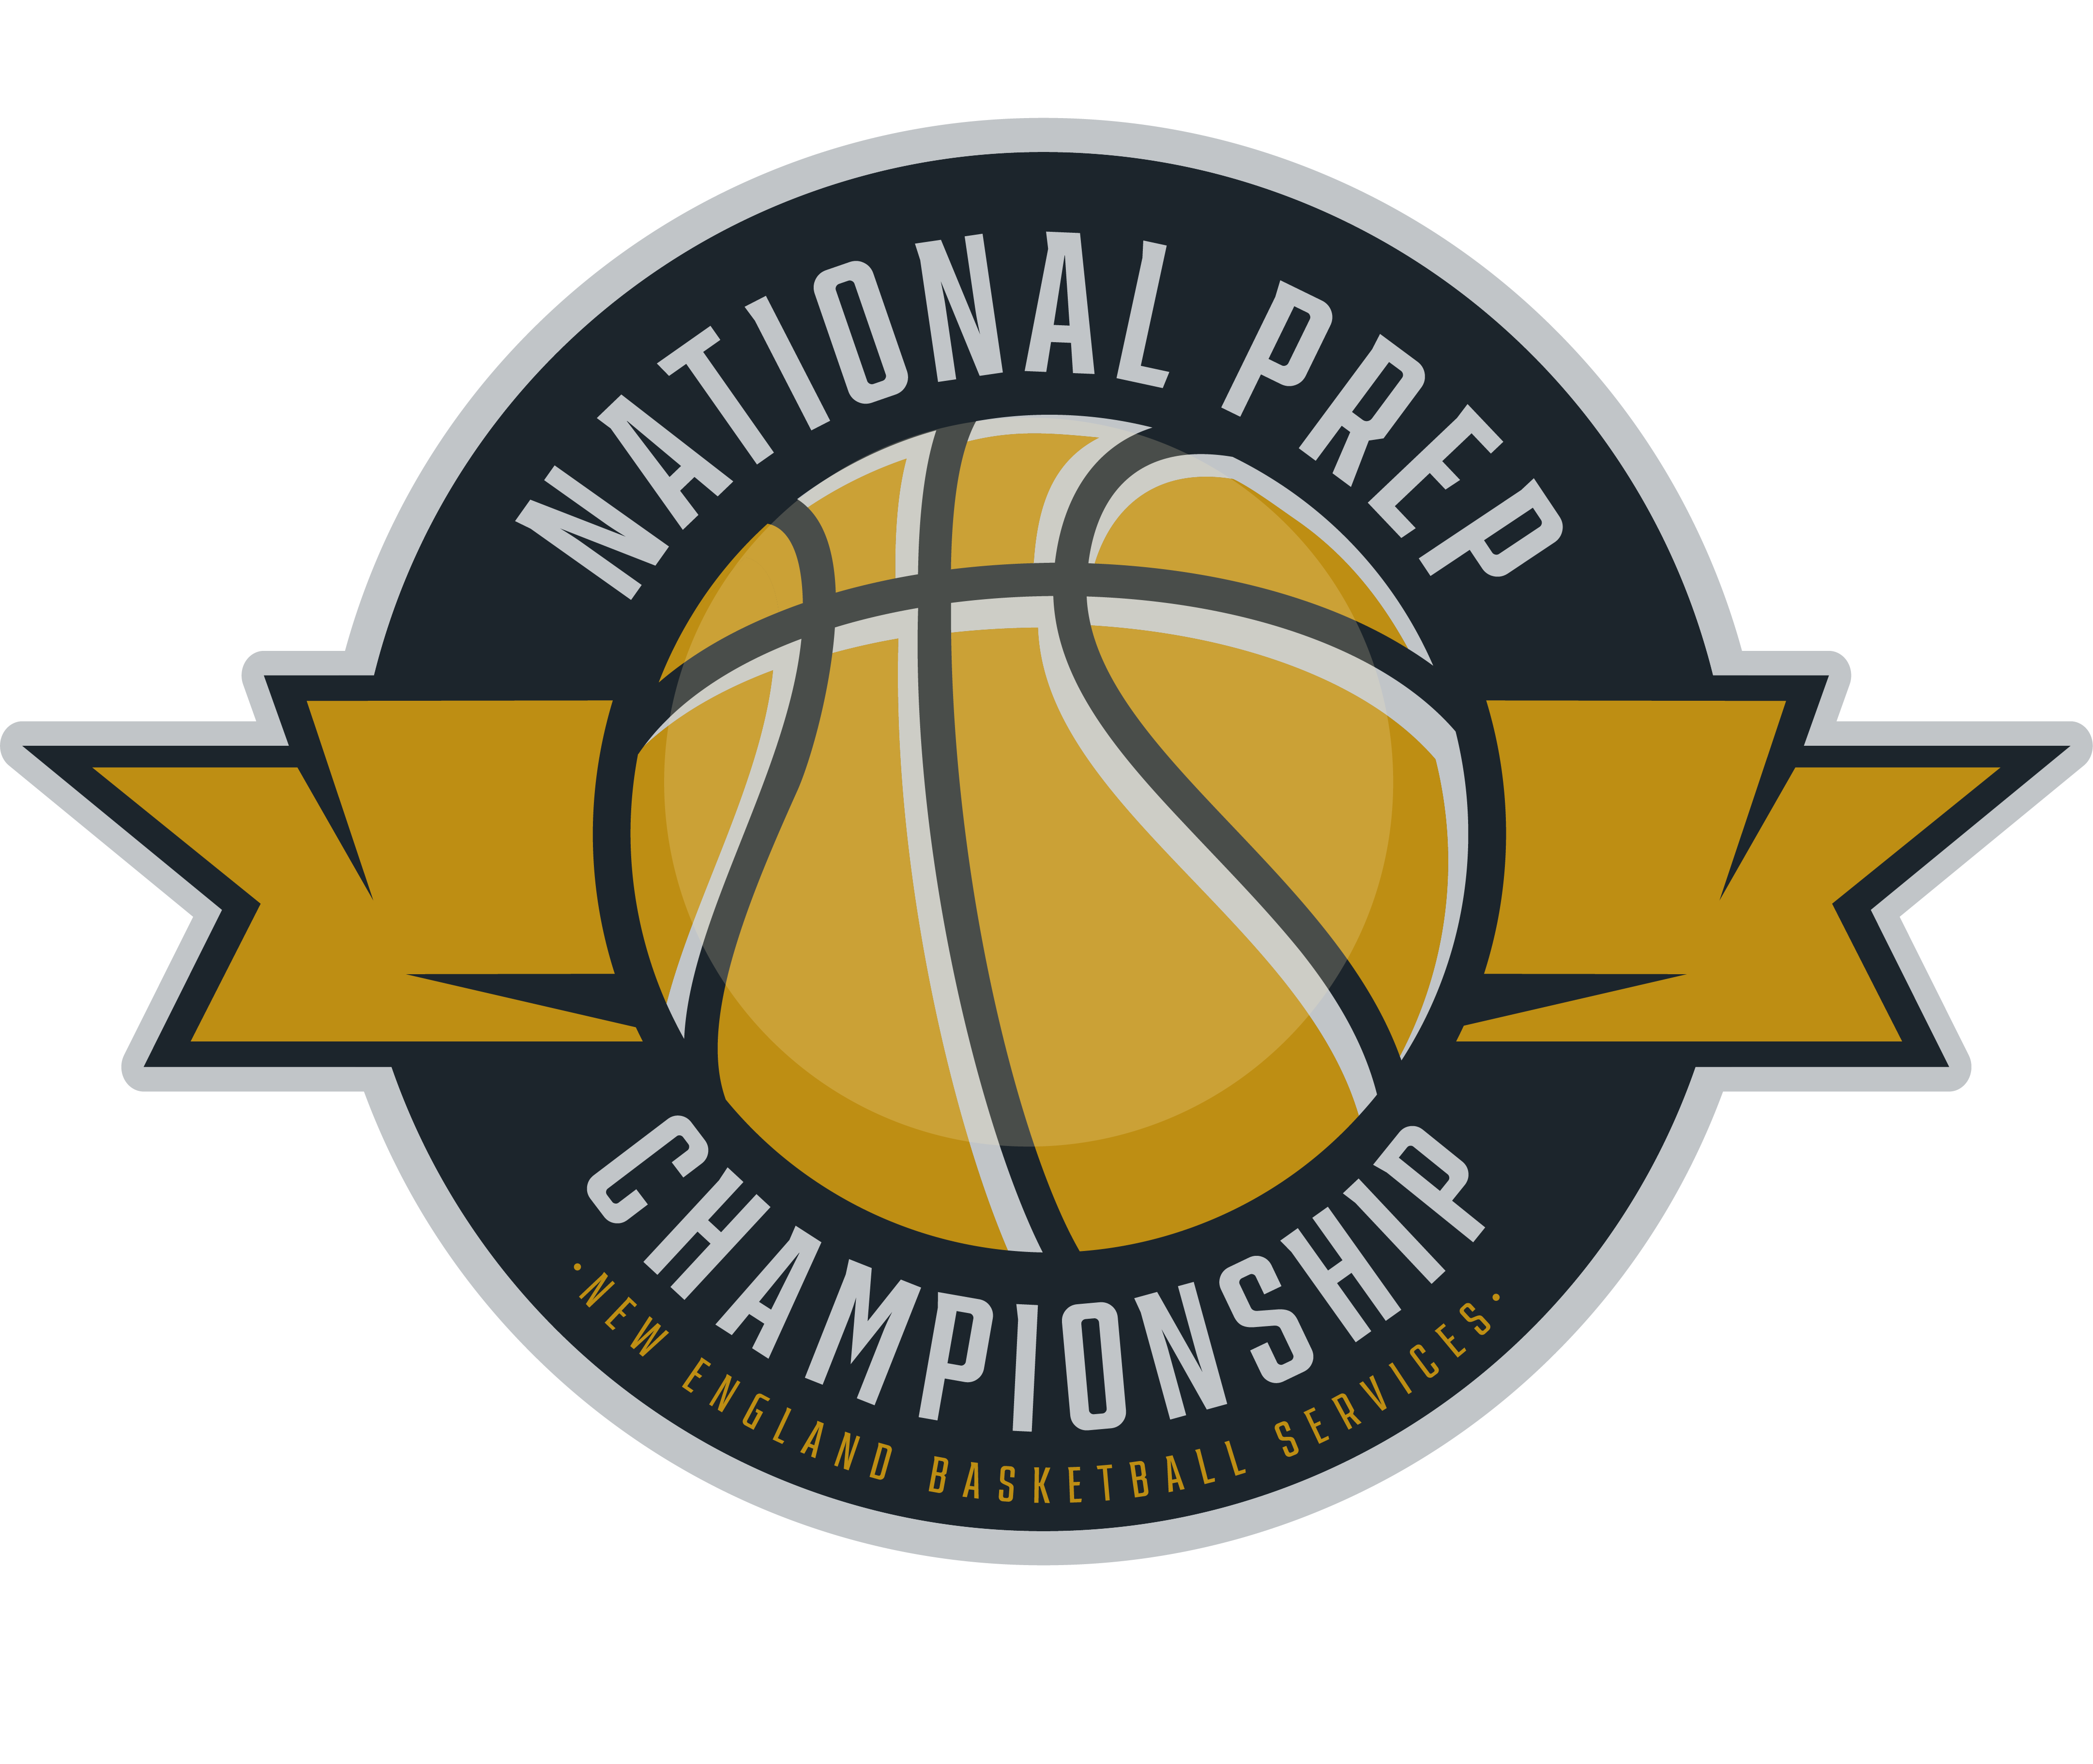 NEBS National Basketball Championship